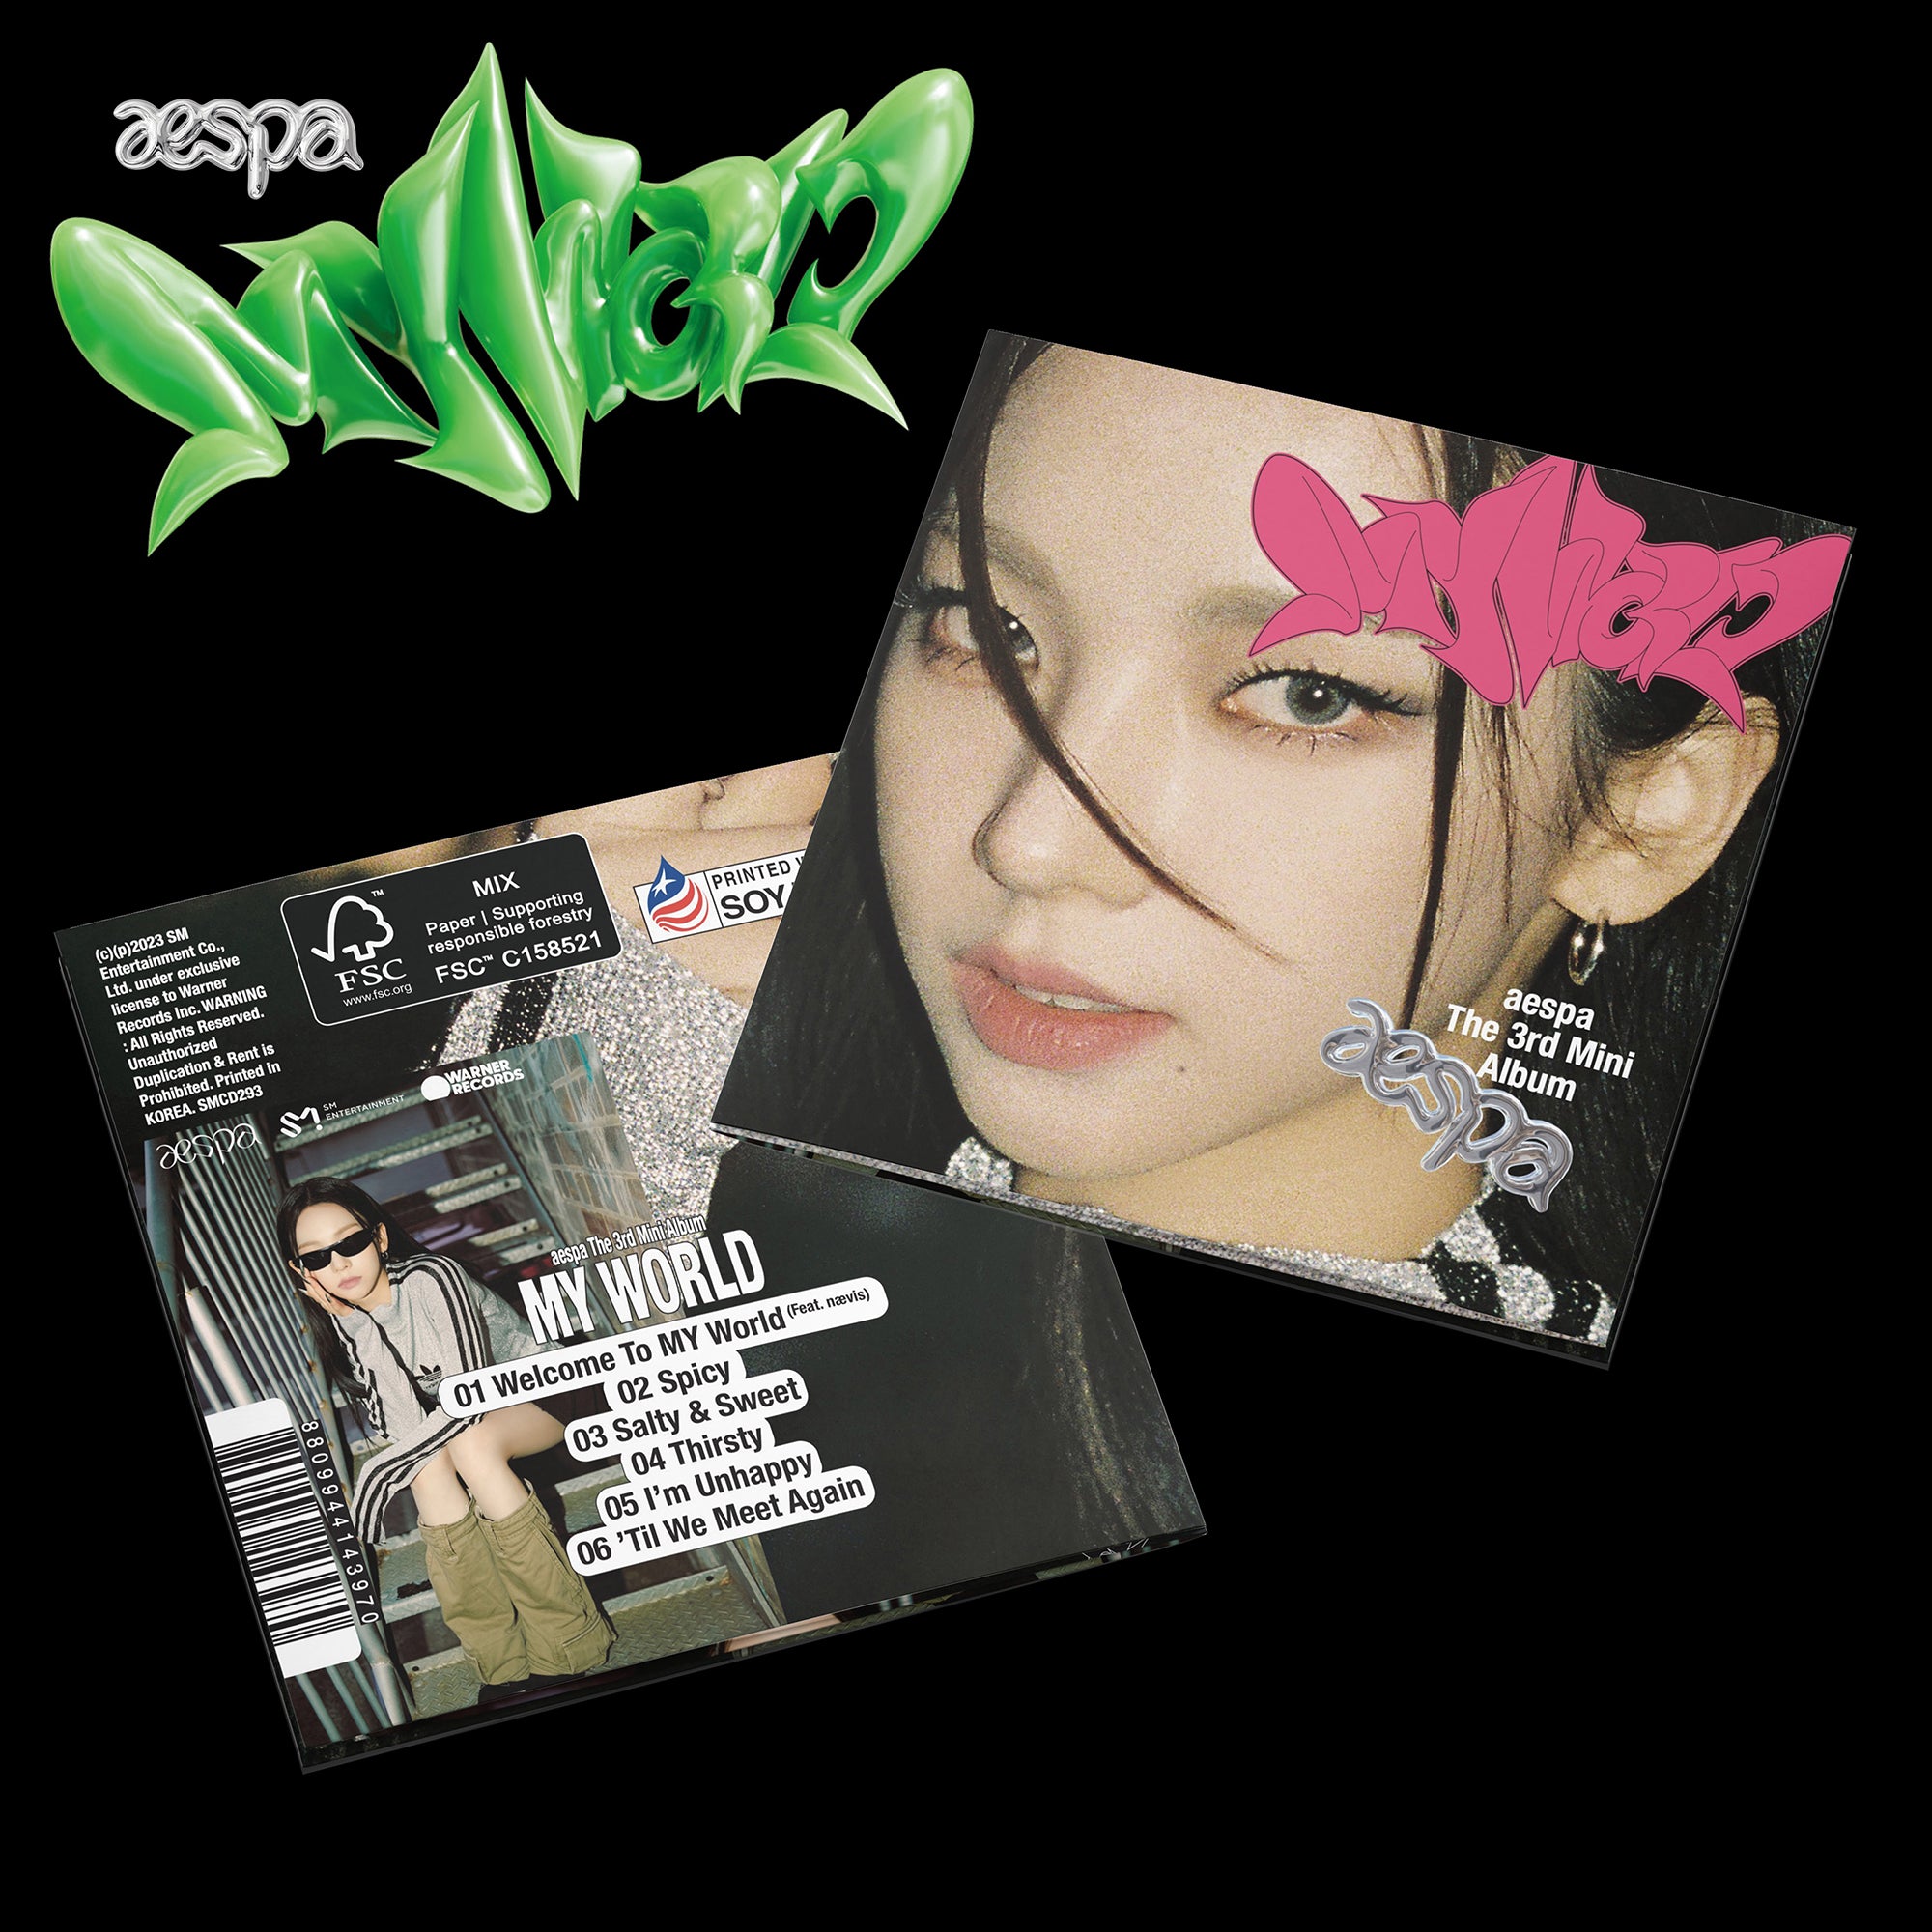 Aespa - My World (Giselle) The 3rd Mini Album